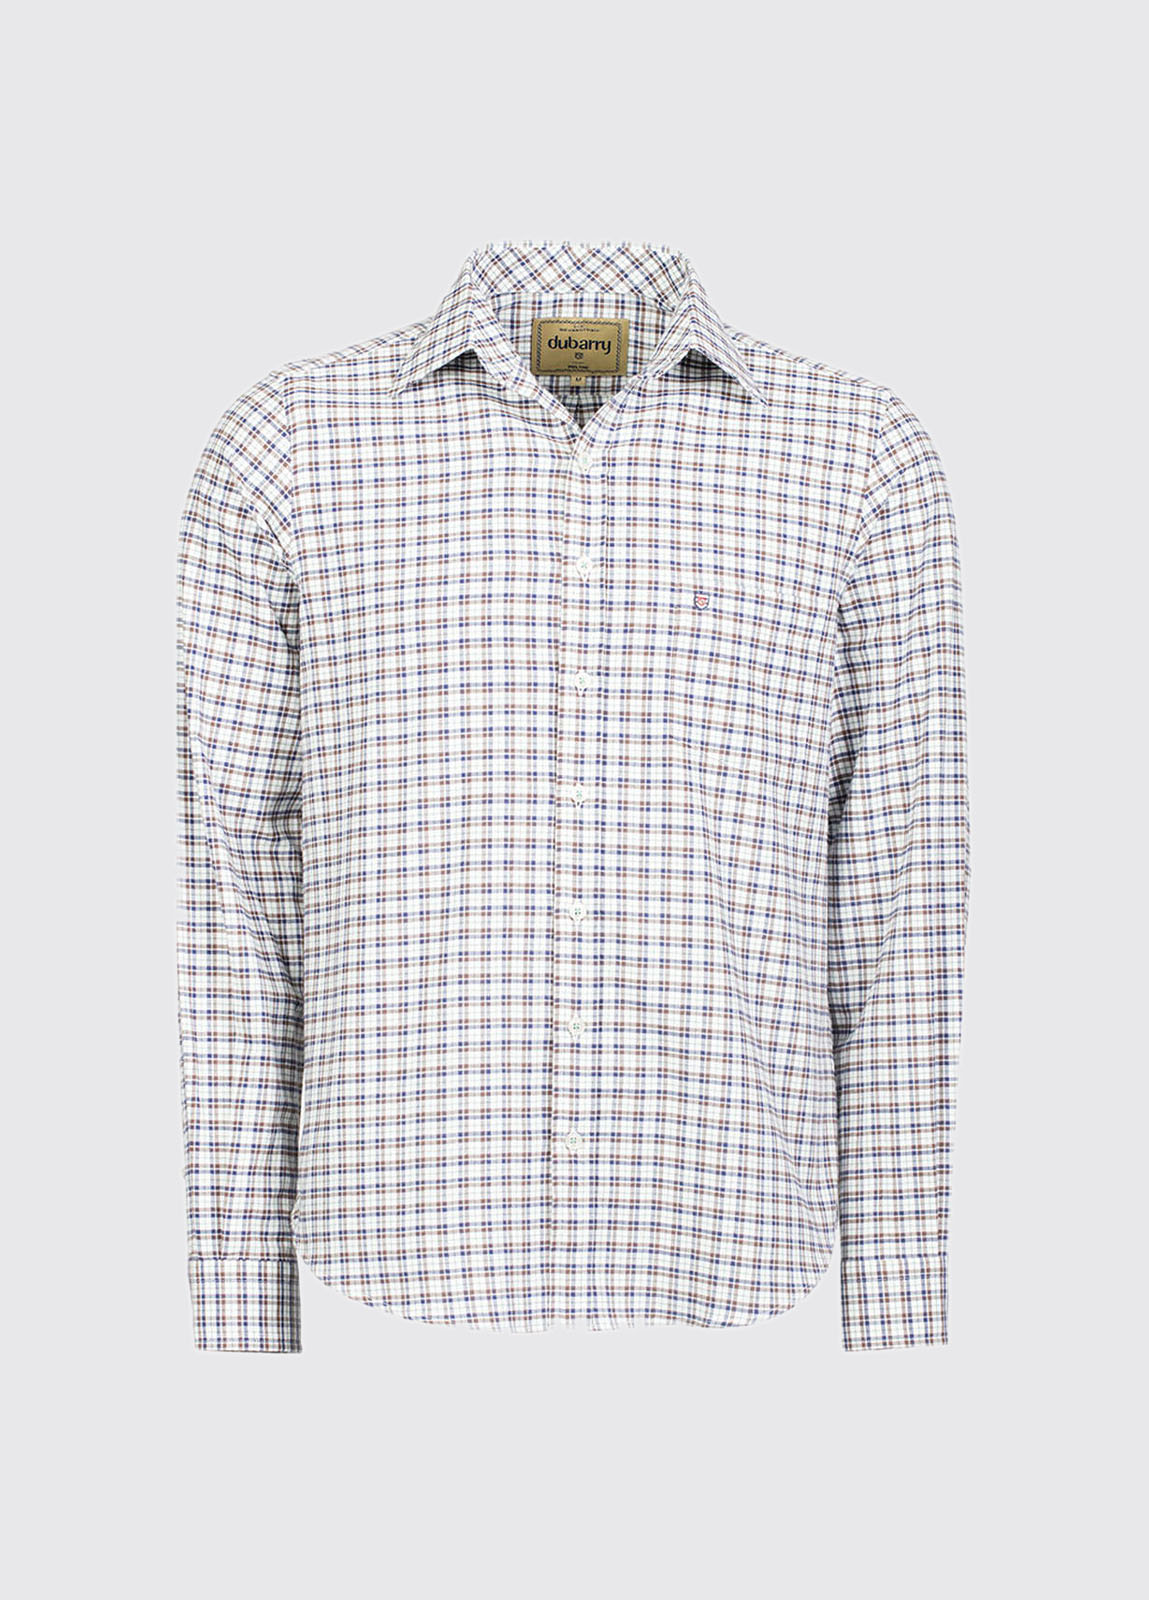 Slane Men's Cotton Button Up Shirt - Navy Multi